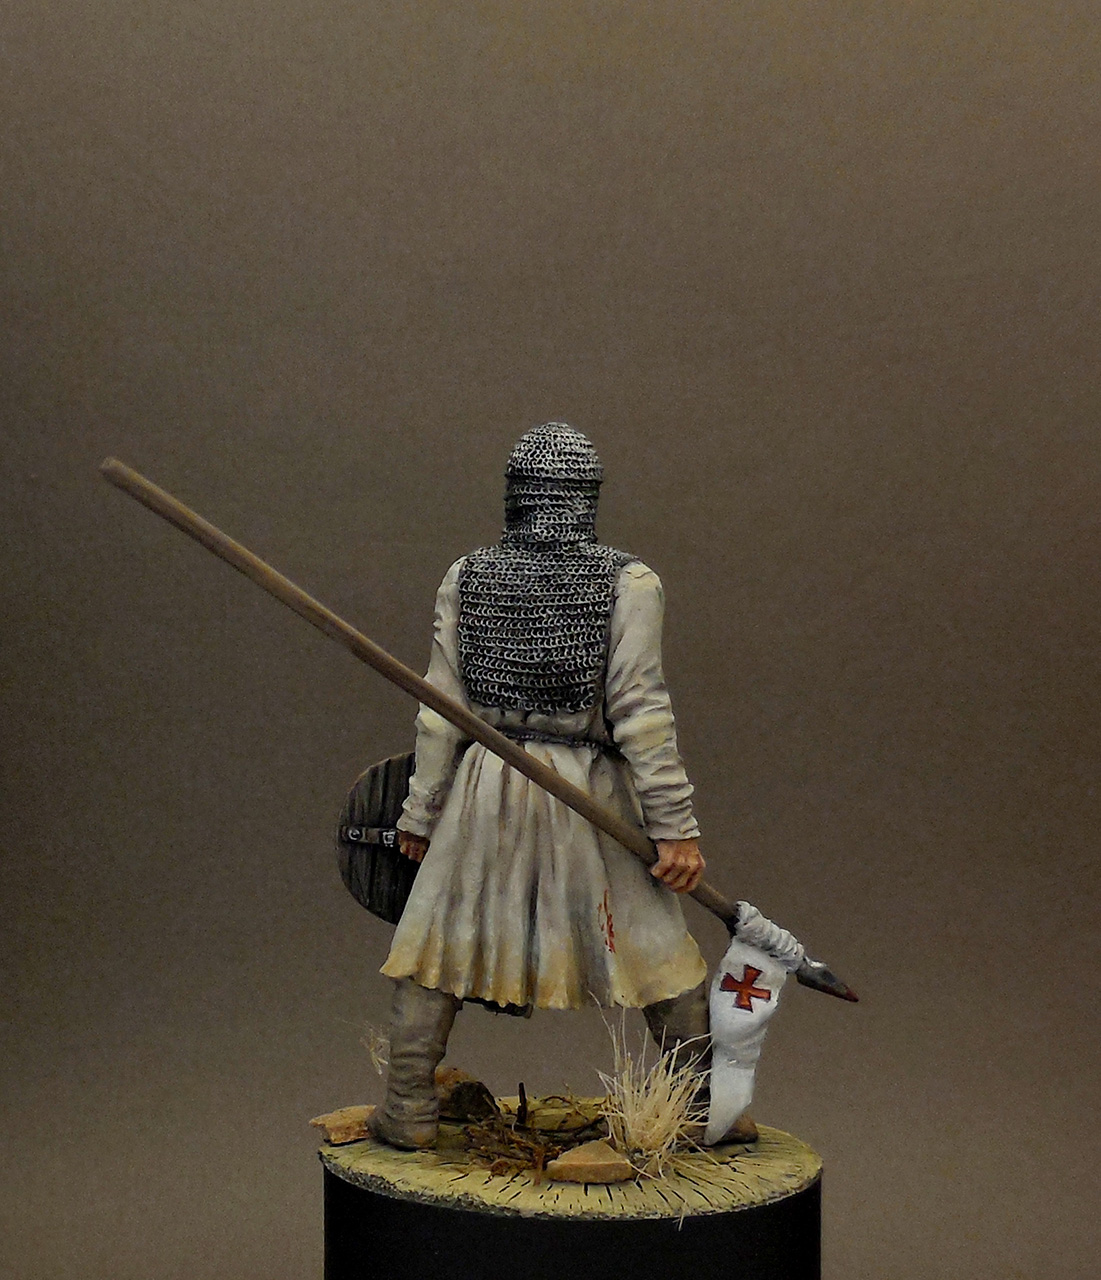 Figures: Western European warrior, 12-13th AD, photo #3